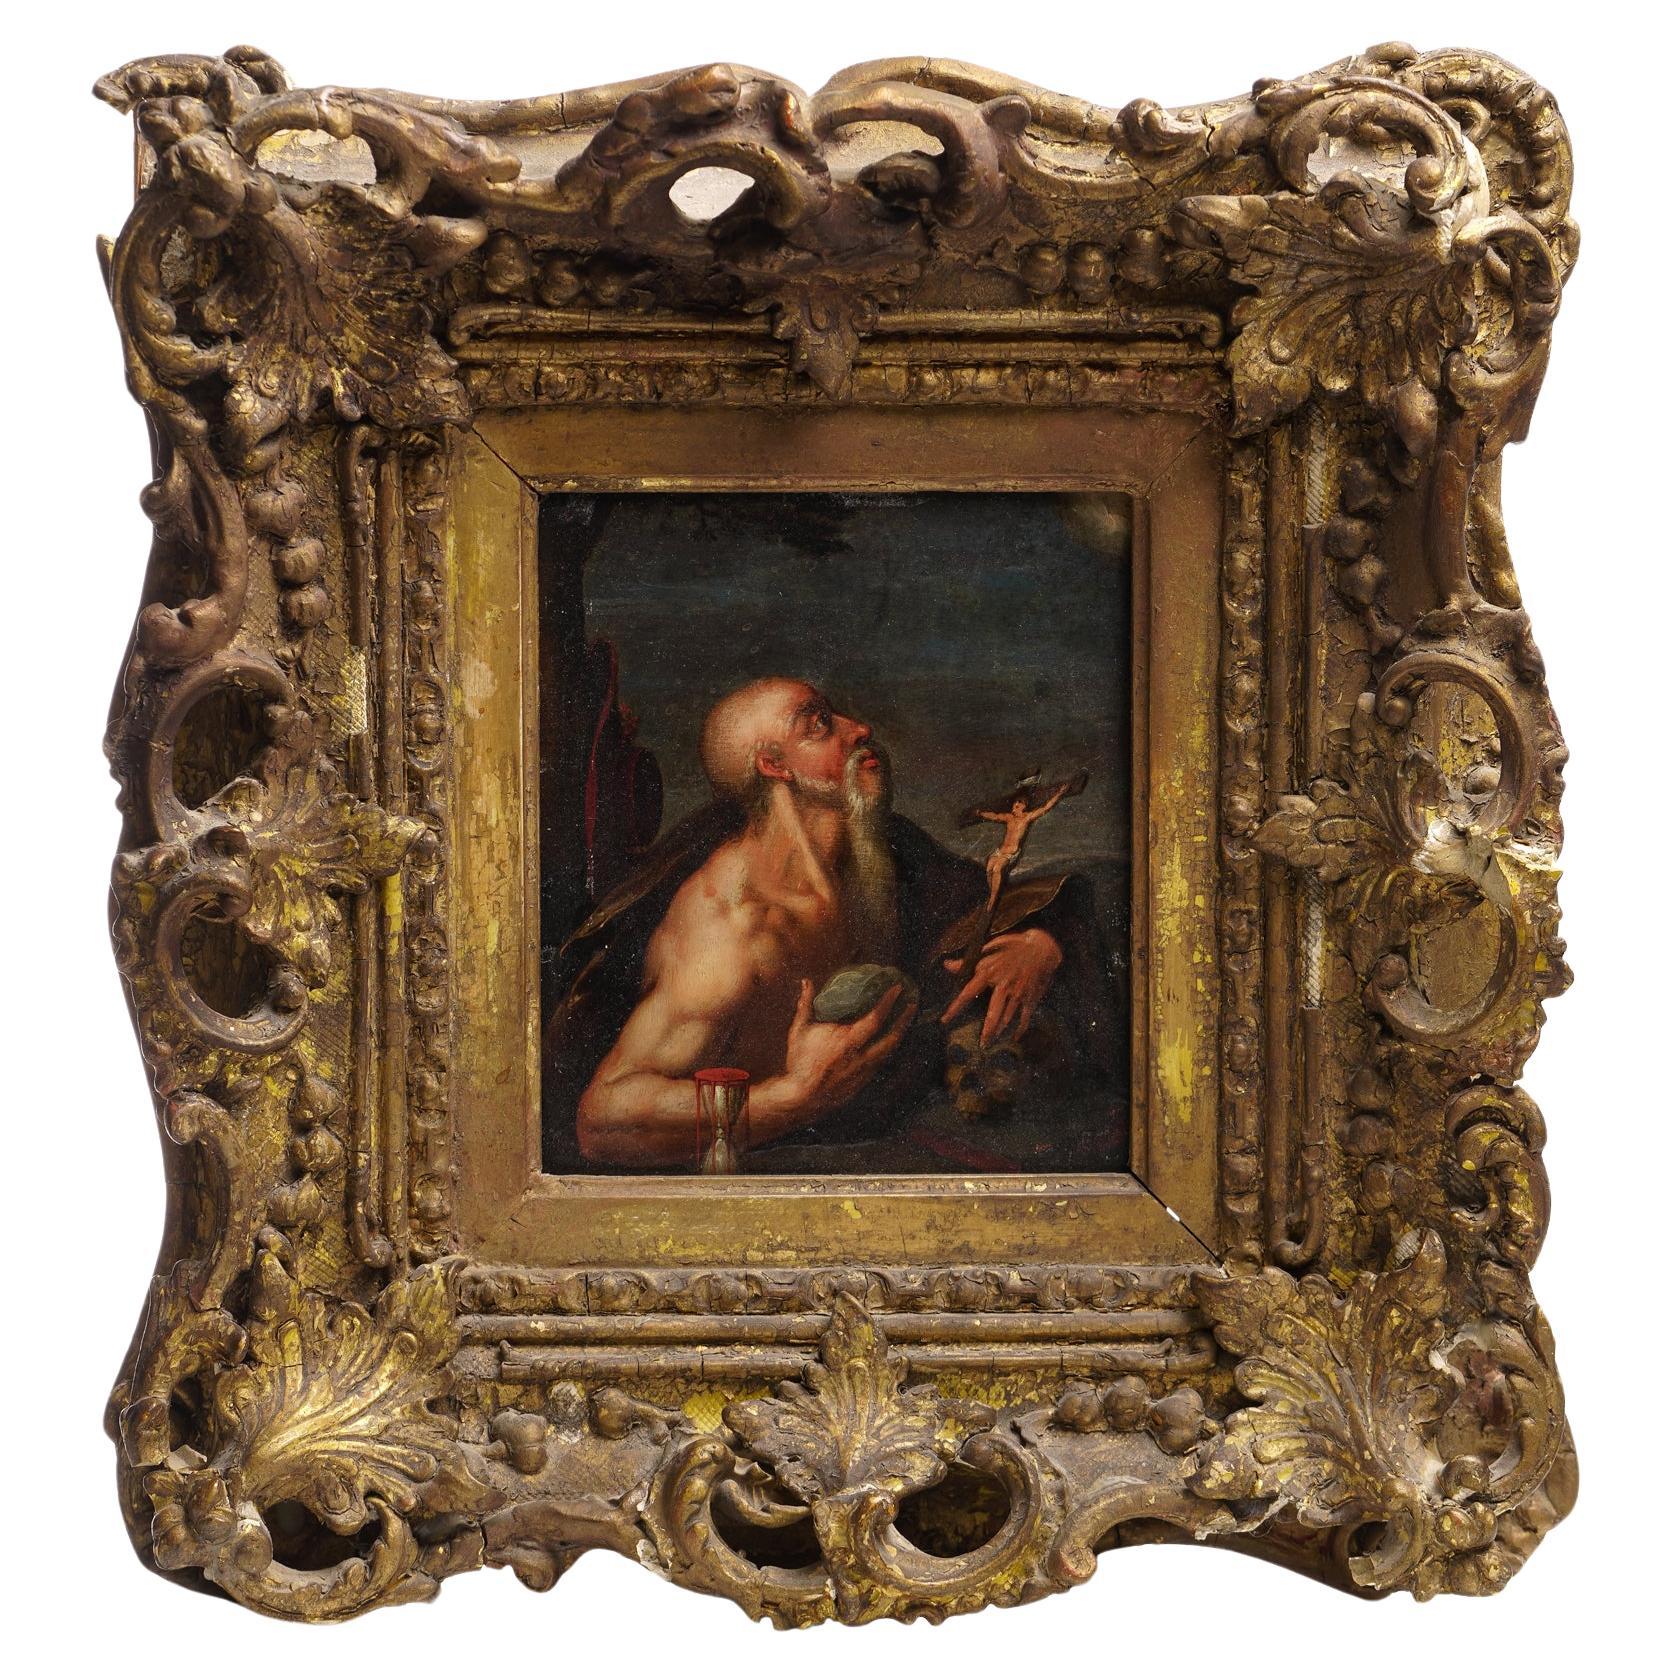 17th century oil on copper portrait - St. Jerome For Sale